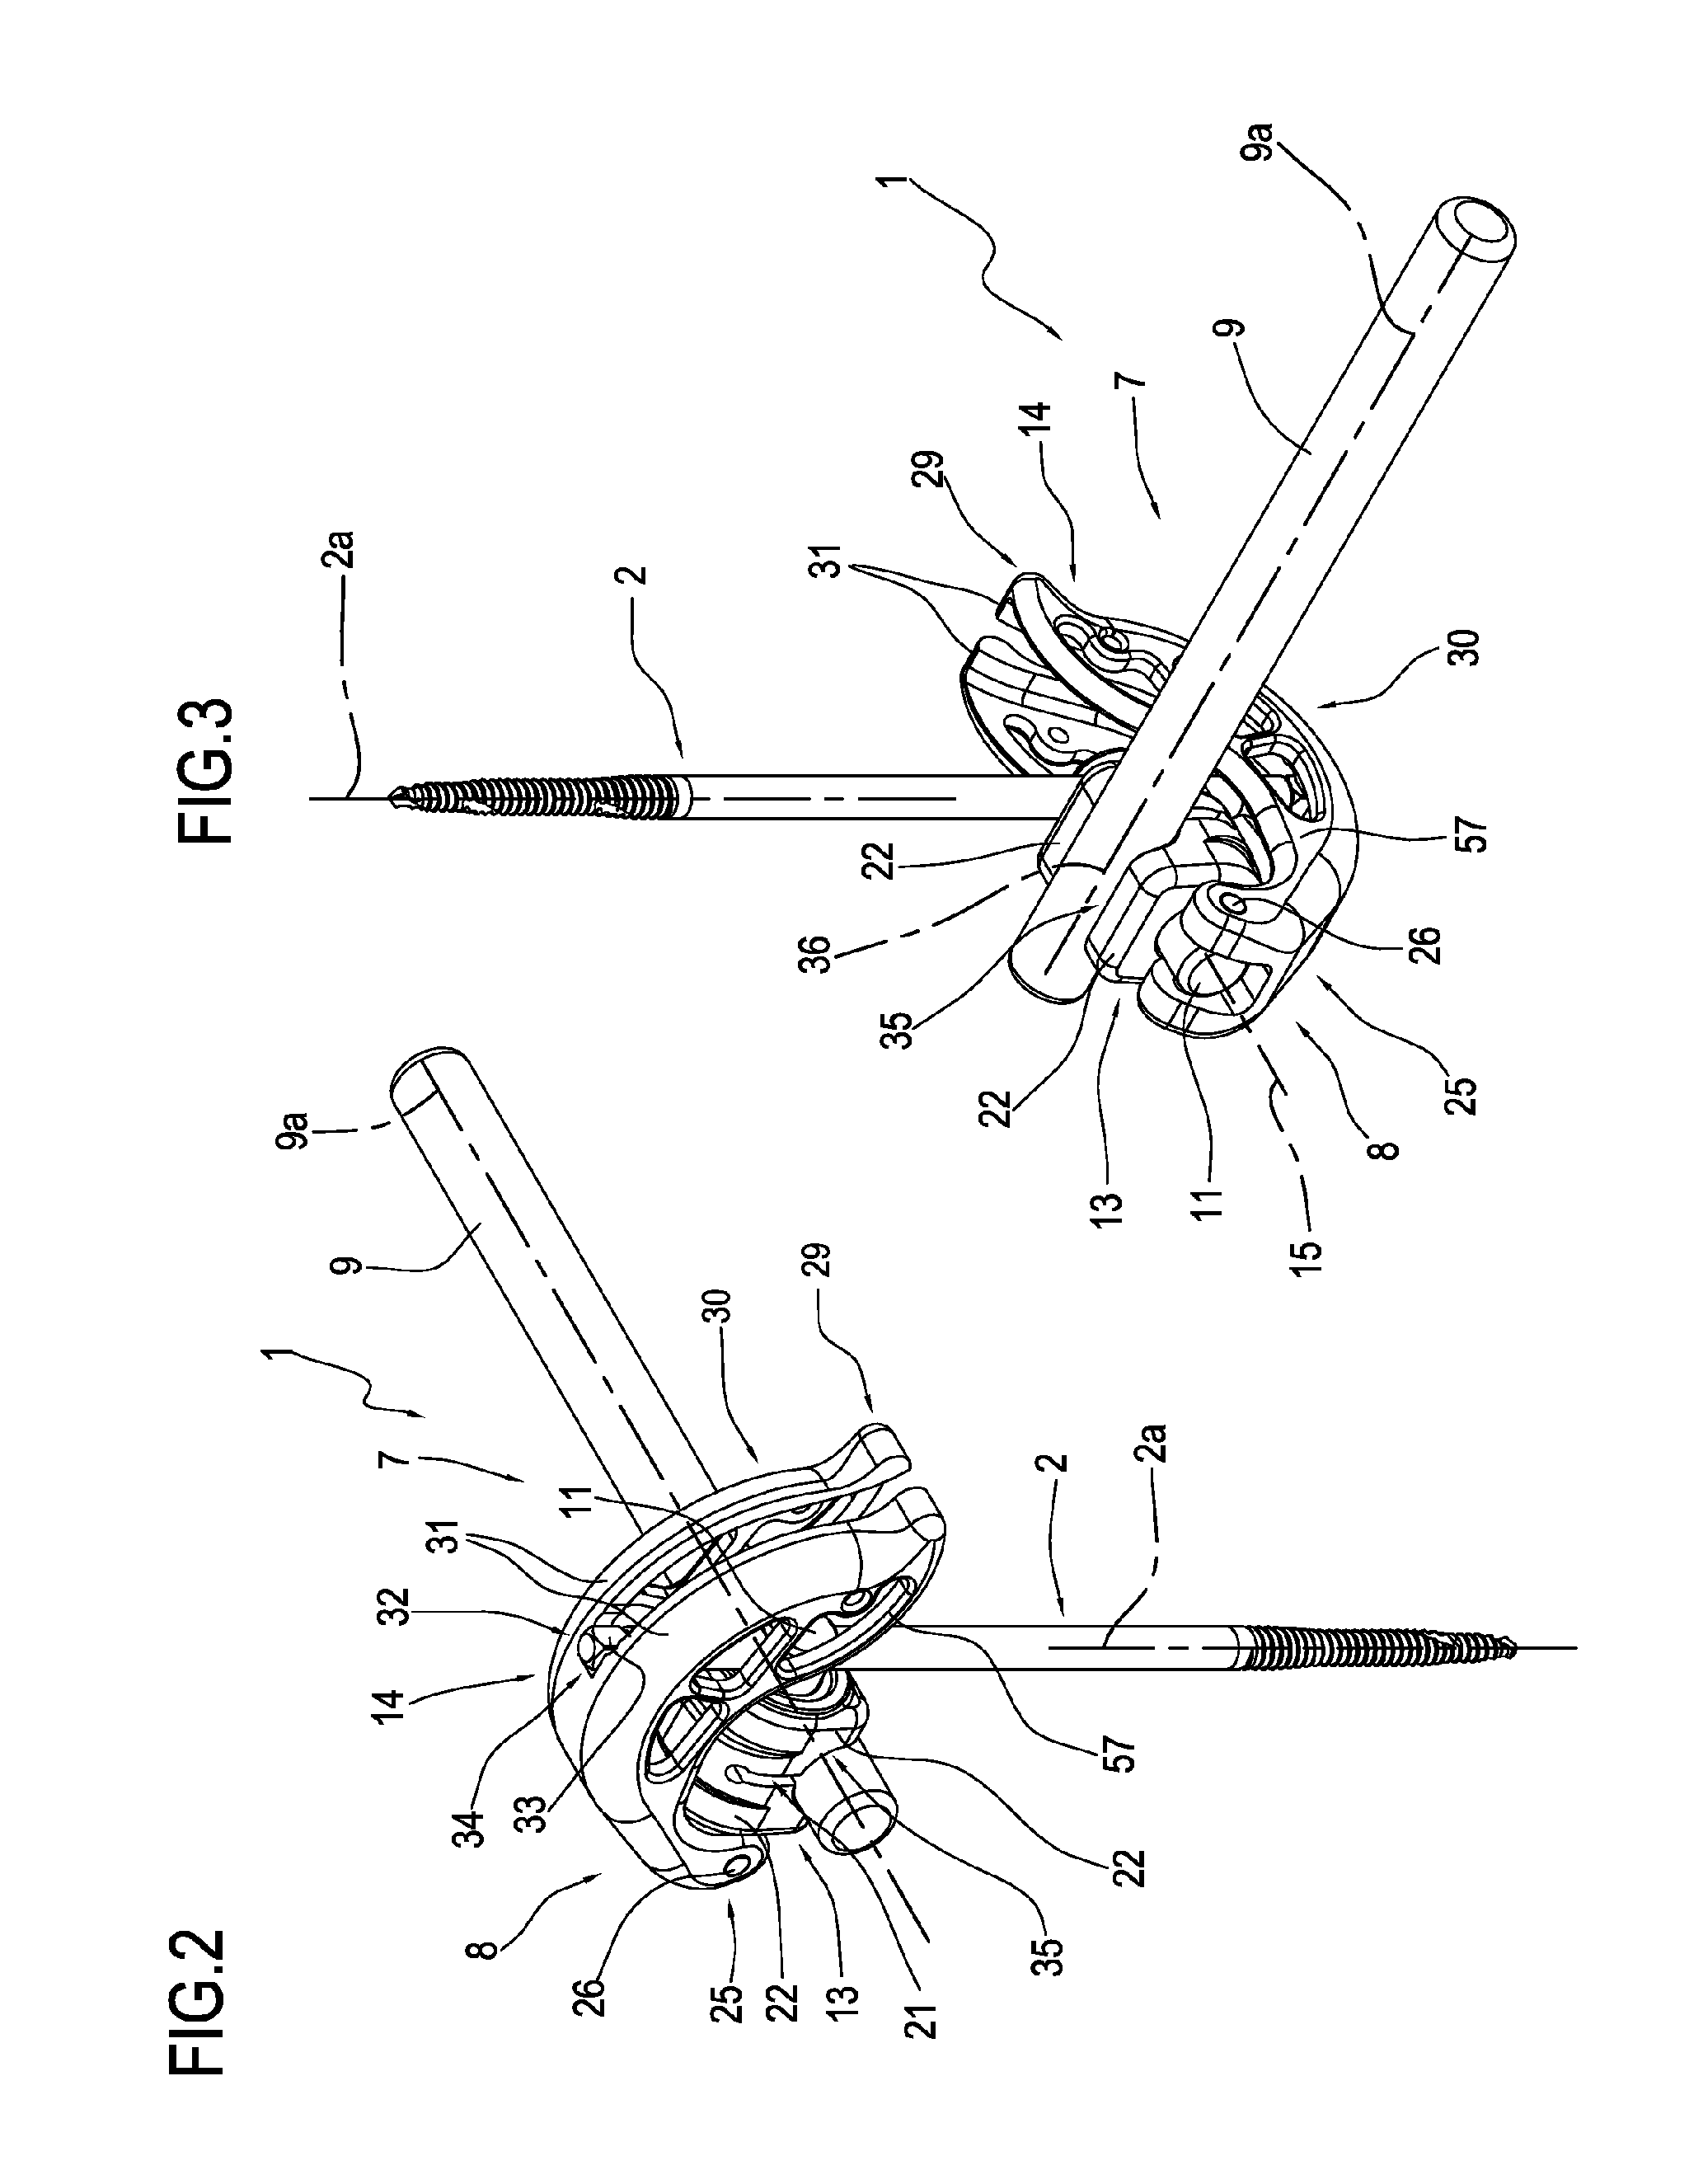 Multi-purpose external fixator